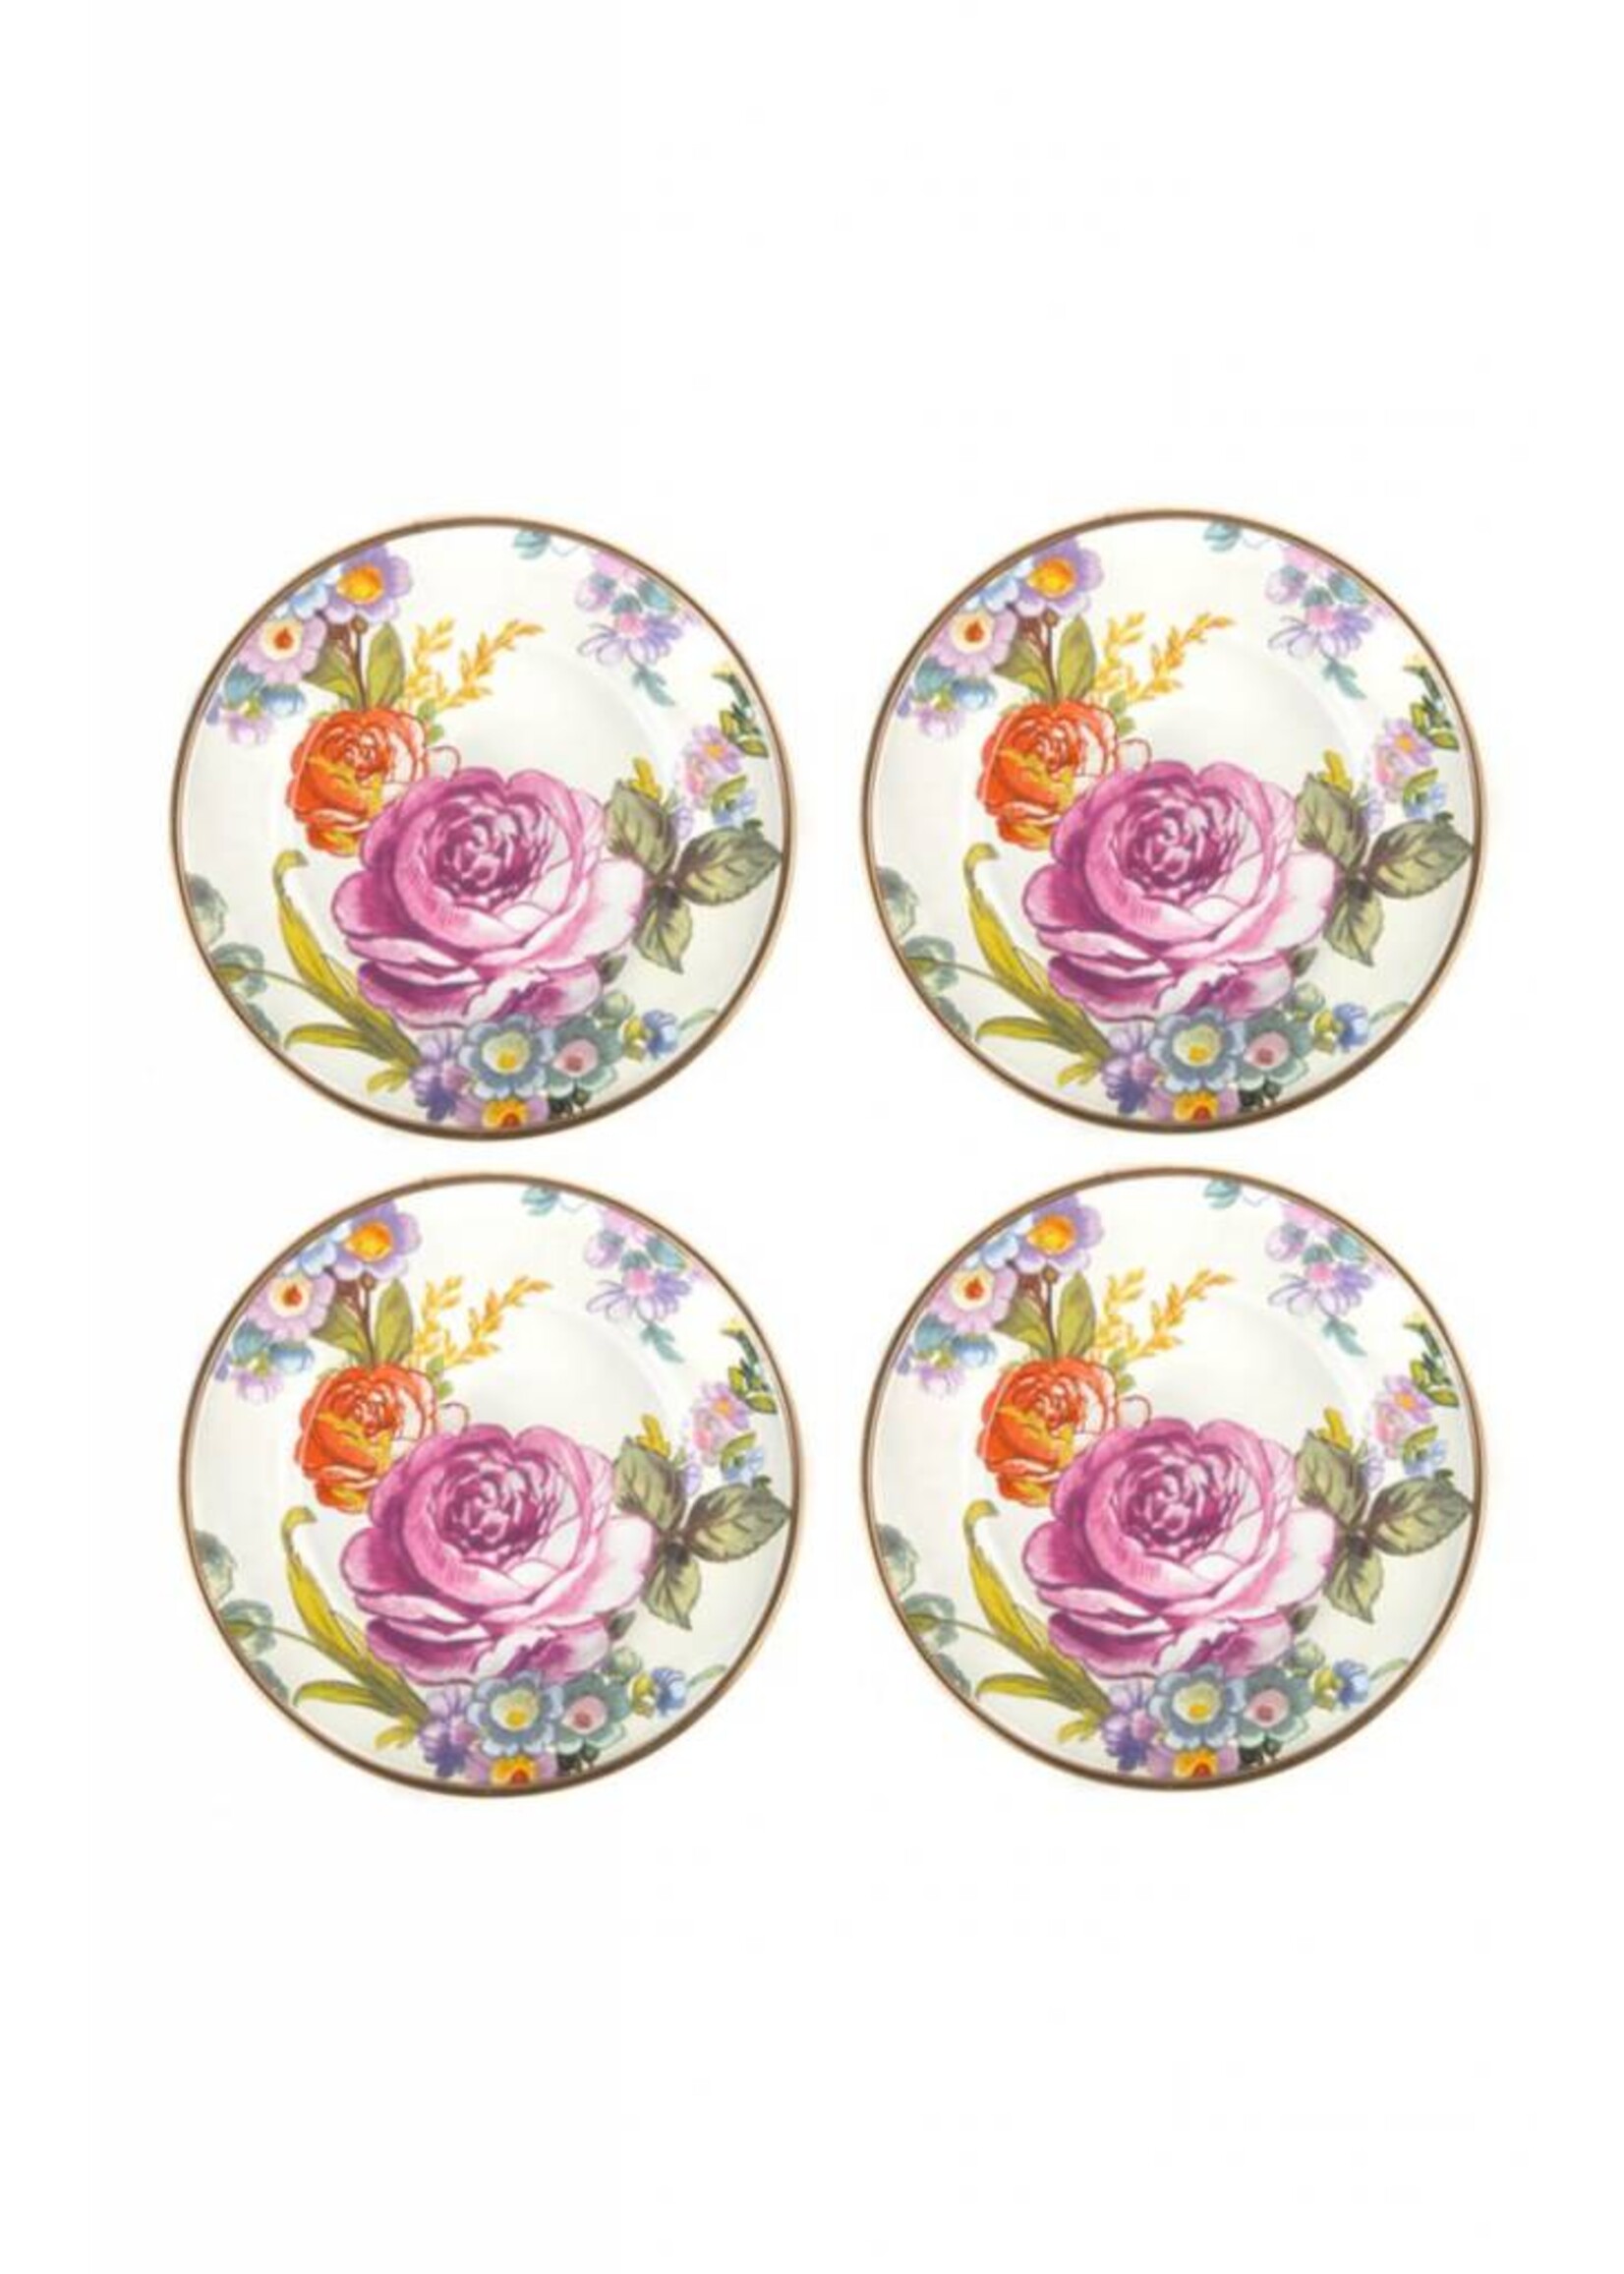 MacKenzie-Childs Flower Market Canape Plates - Set of 4